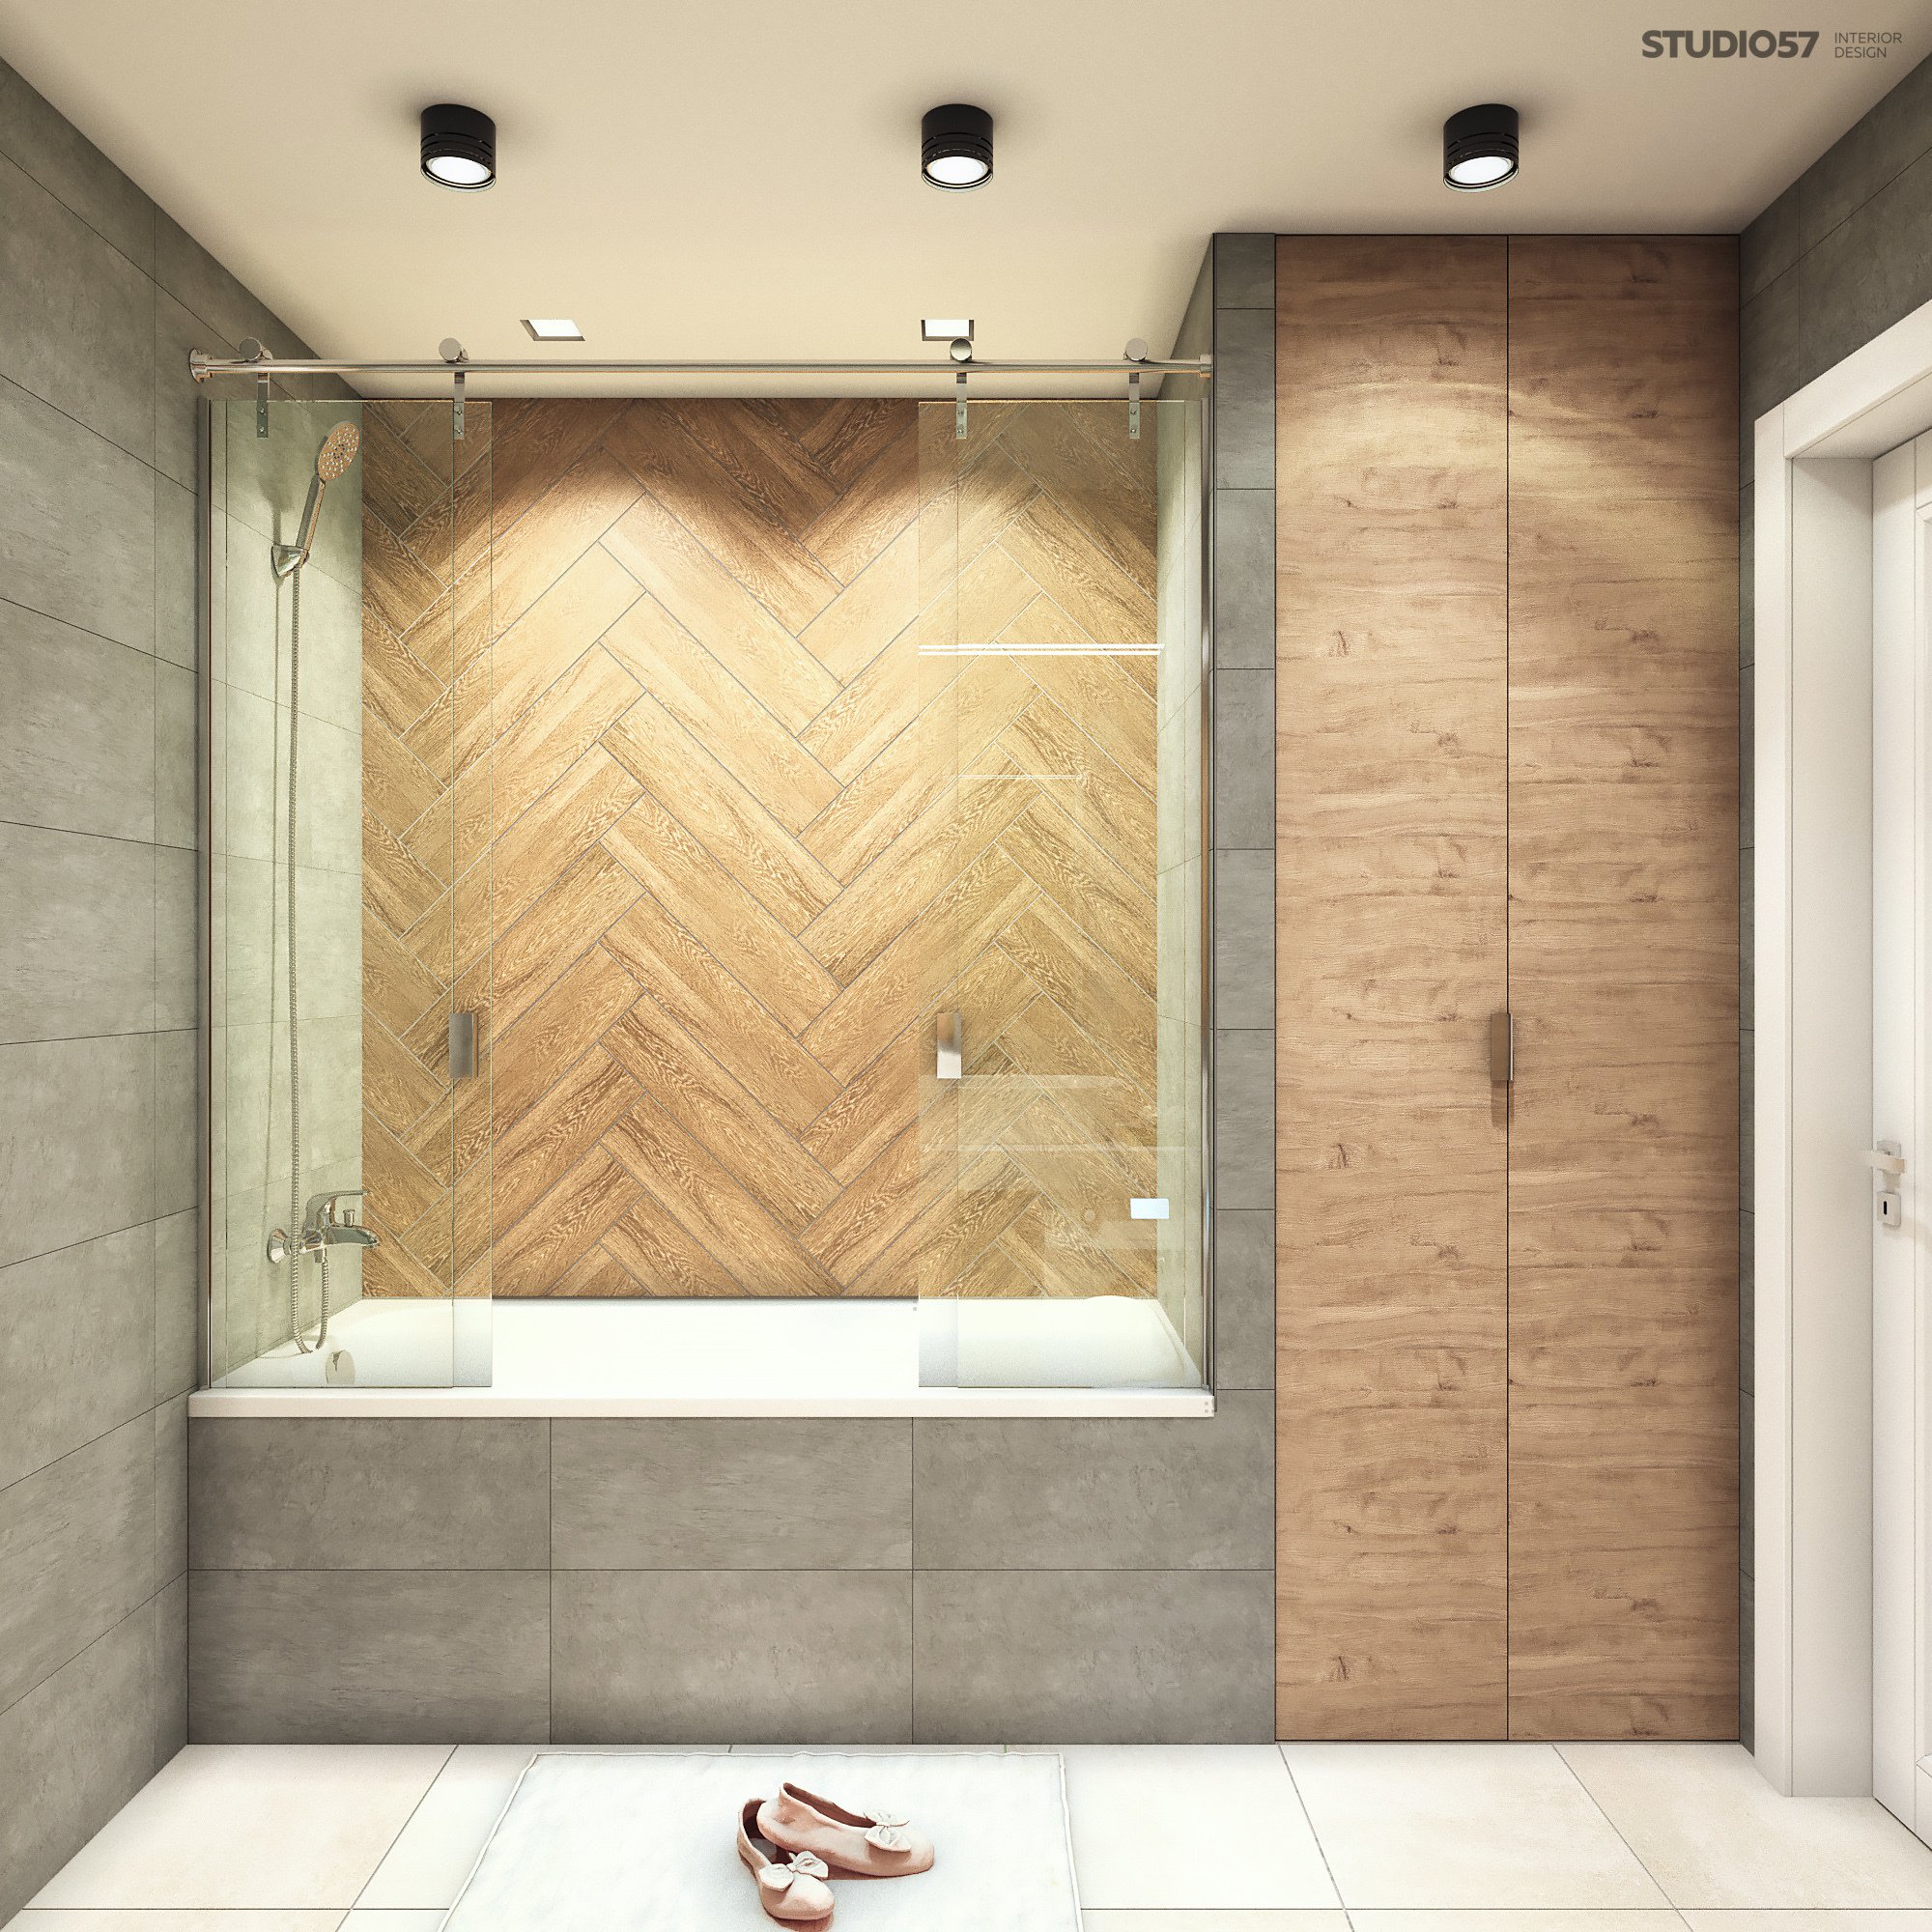 Bathroom Interior in Contemporary Style Picture